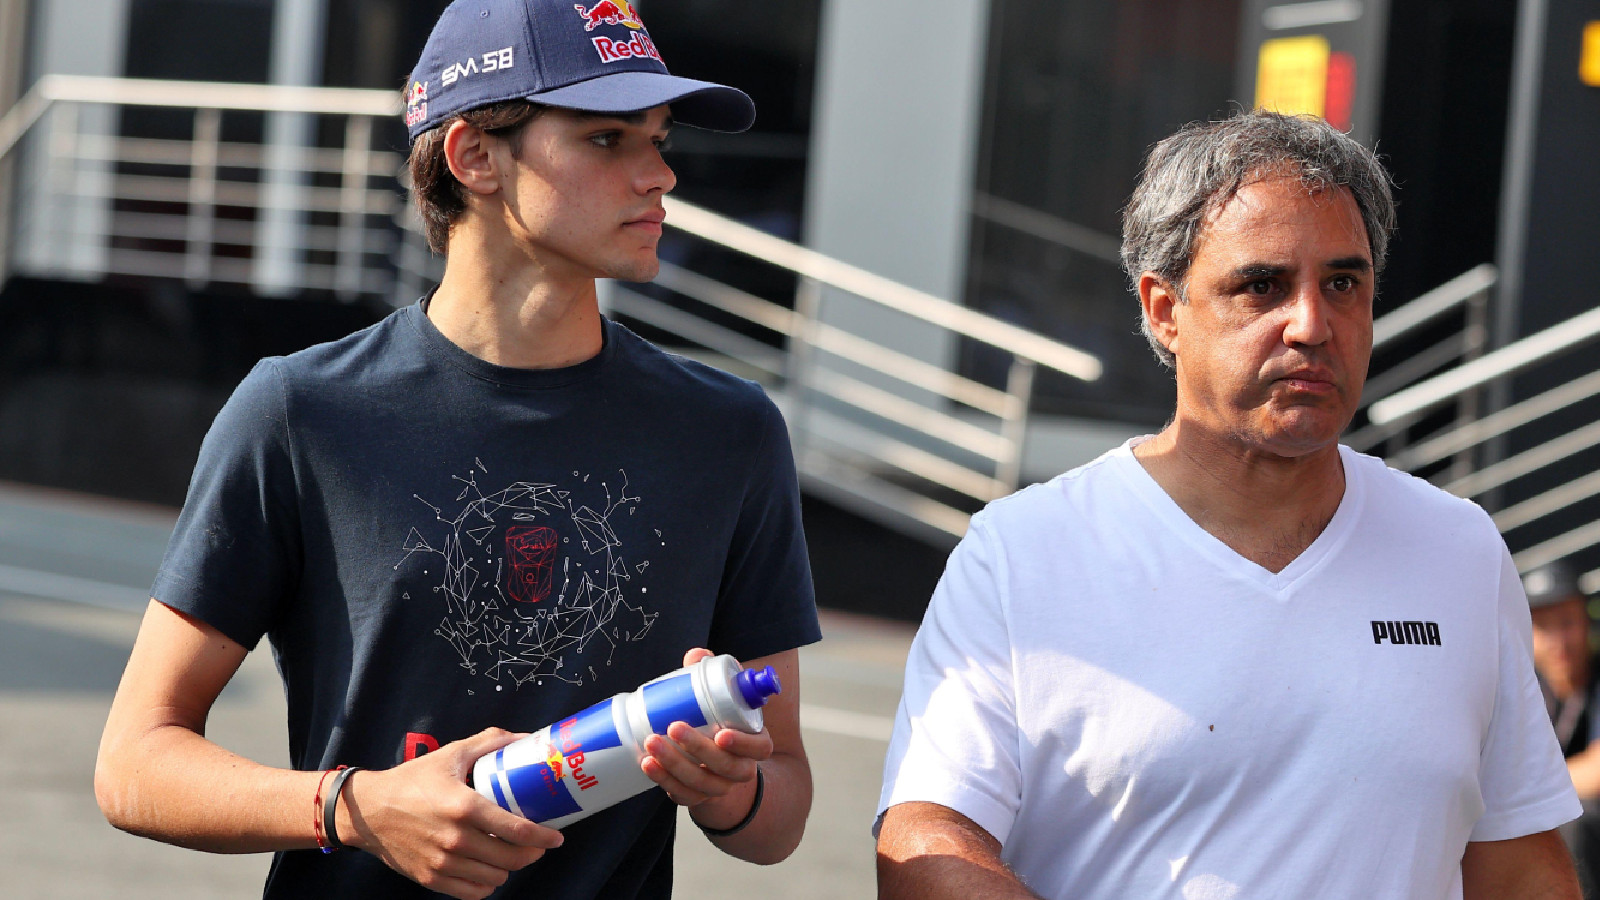 Juan Pablo Montoya pictured with son, Sebastien Montoya